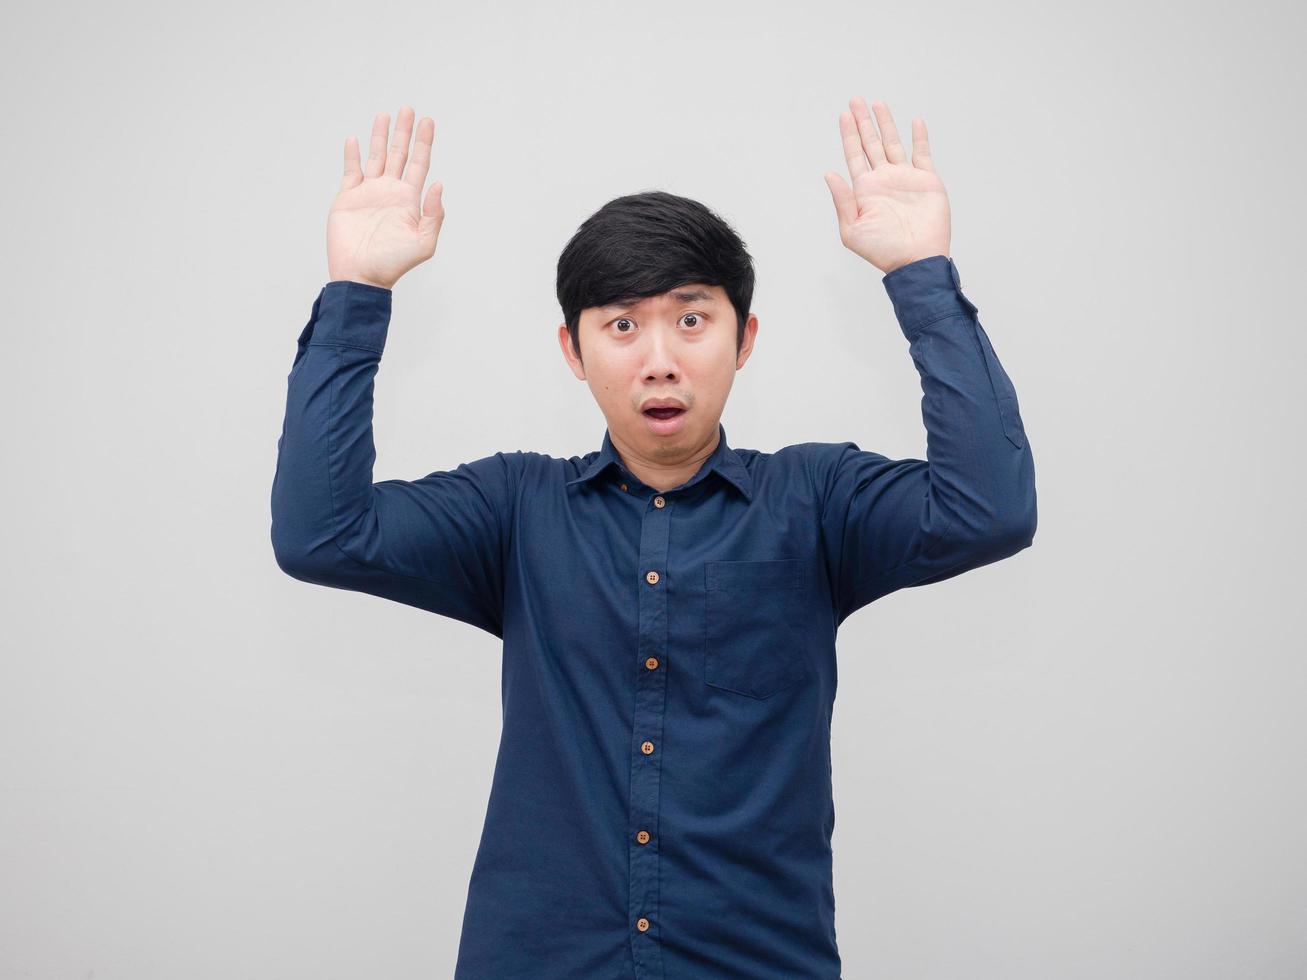 Asian man surrenfer emotion shocked at face show hand up portrait white background photo